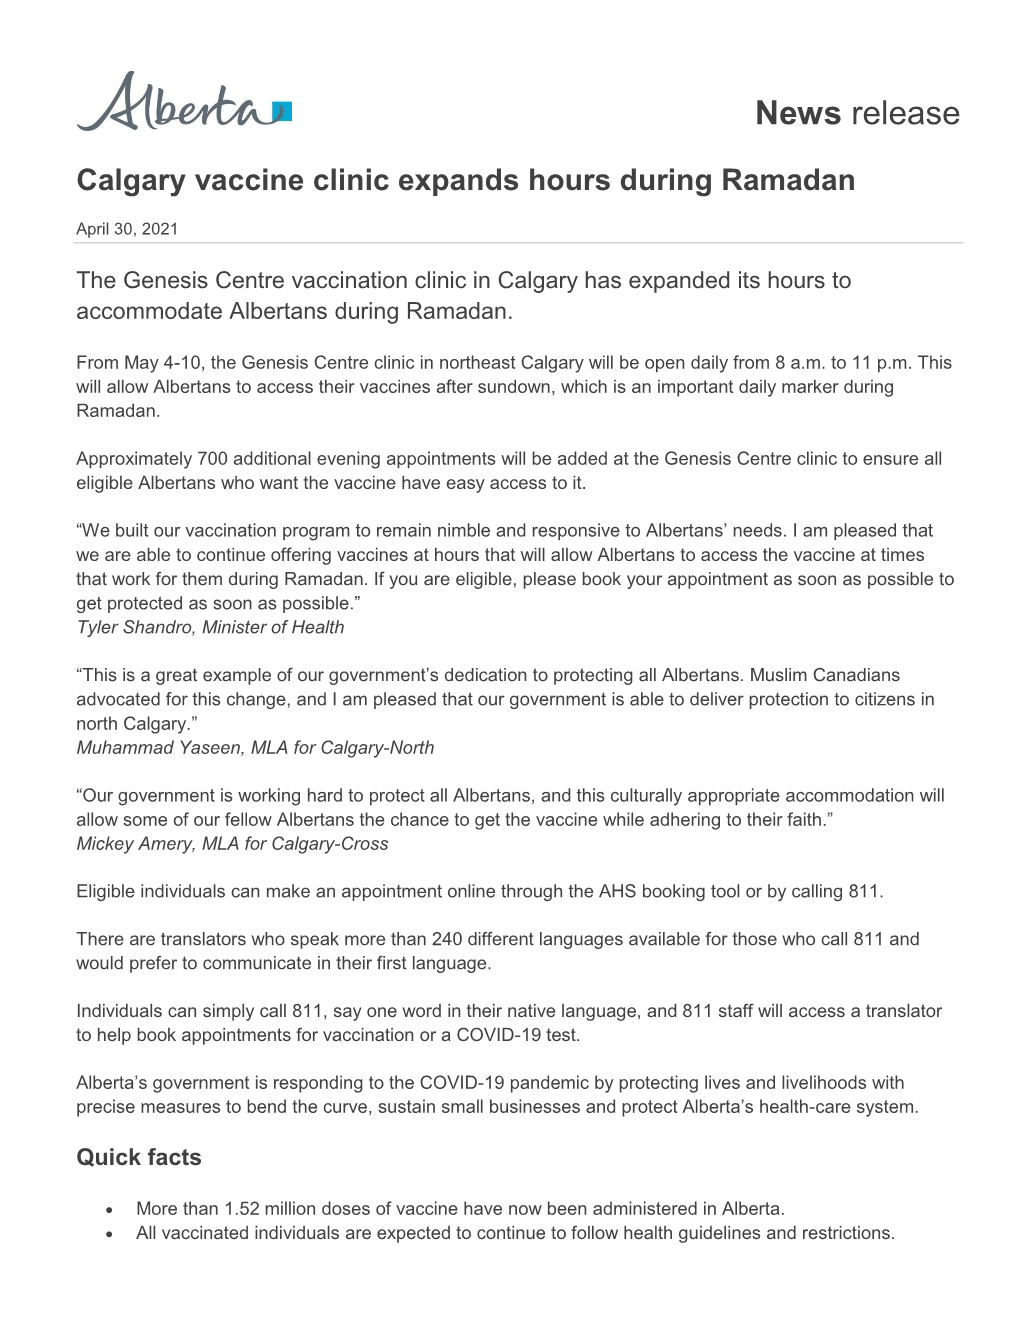 Calgary Vaccine Clinic Expands Hours During Ramadan